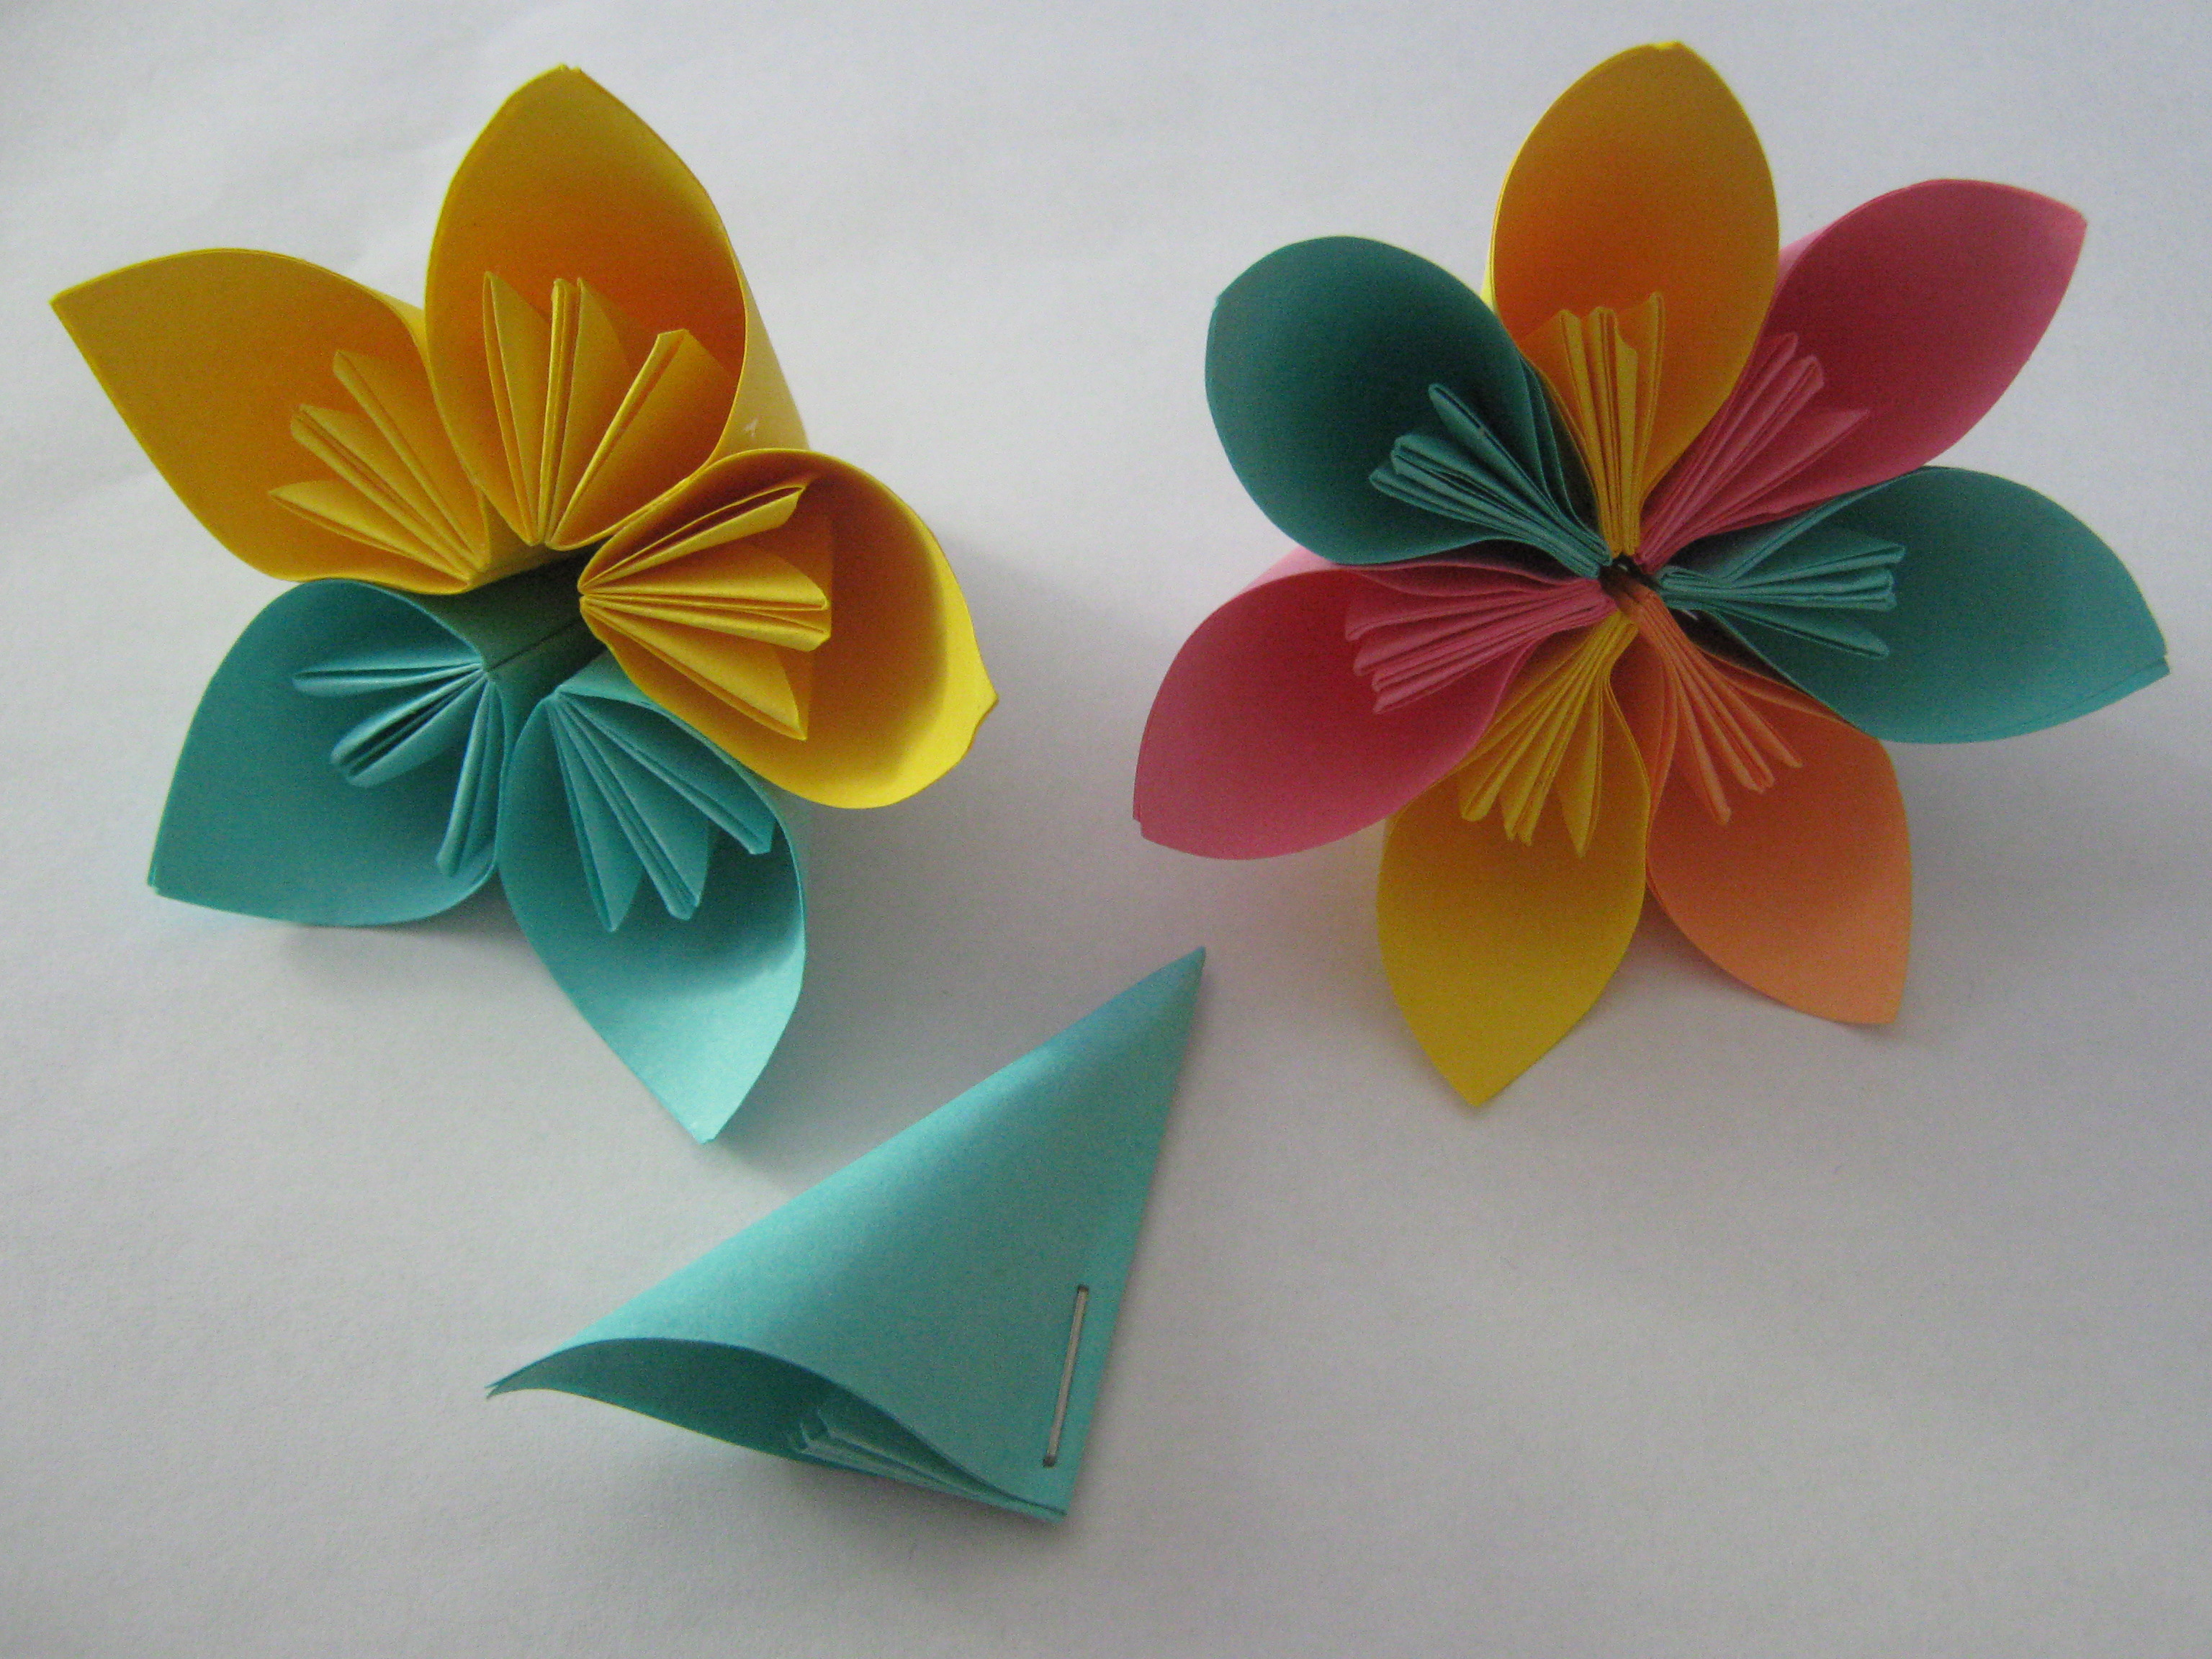 Origami Flower Tutorial Origami Flower Tutorial Learn 2 Origami Origami Paper Craft